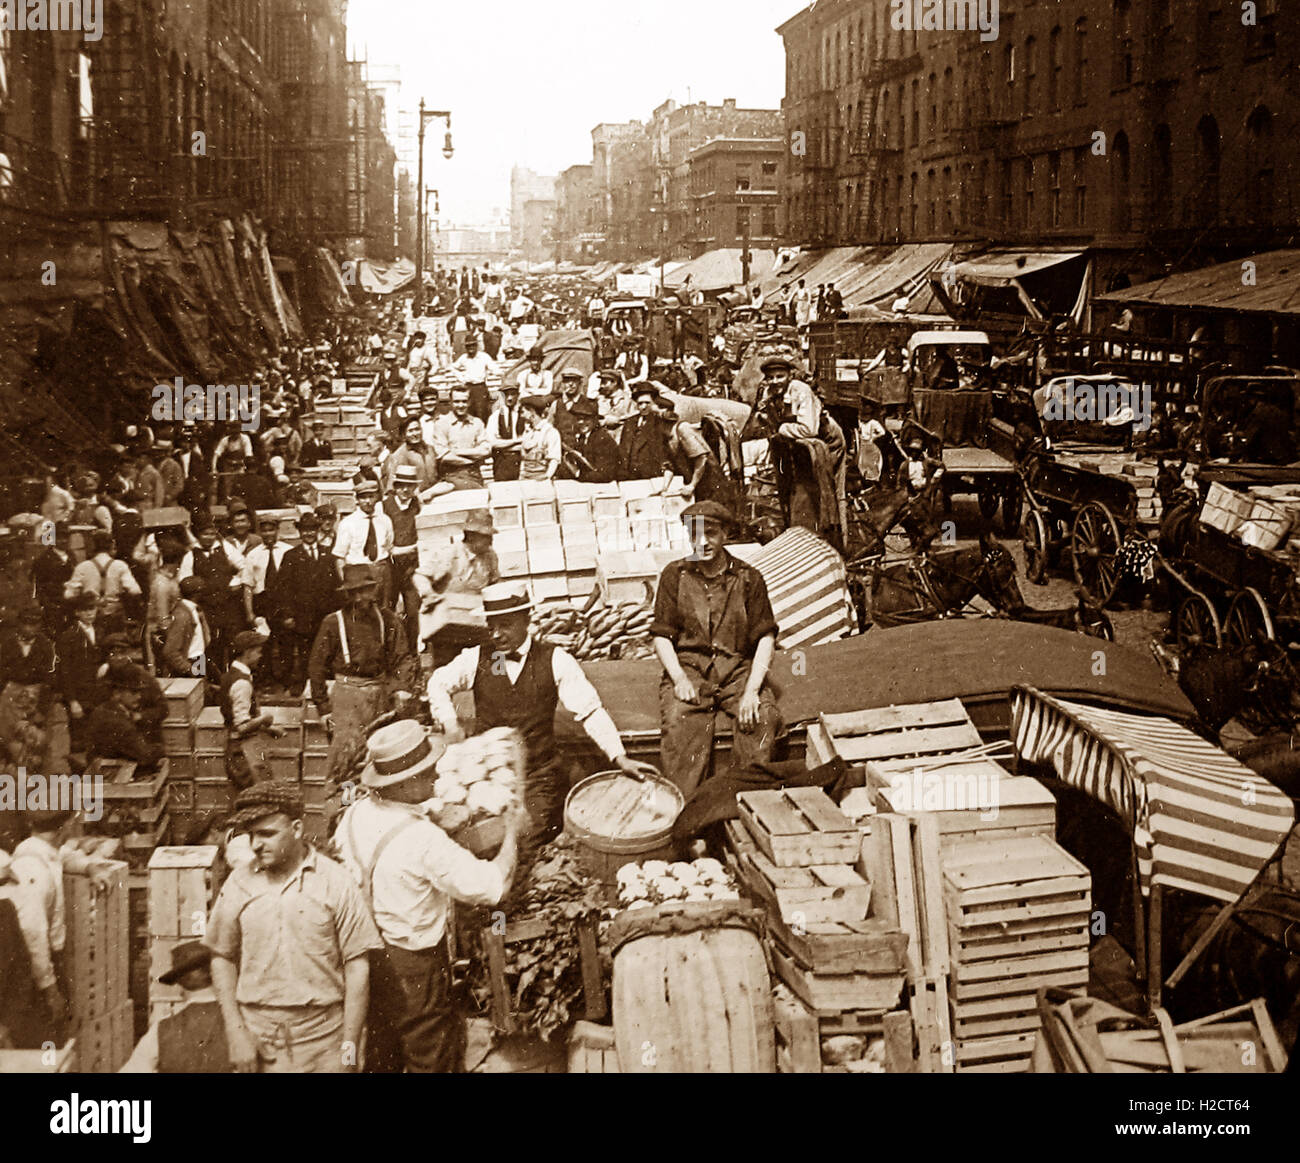 Wholesale Produce Market, Chicago, USA - early 1900s Stock Photo